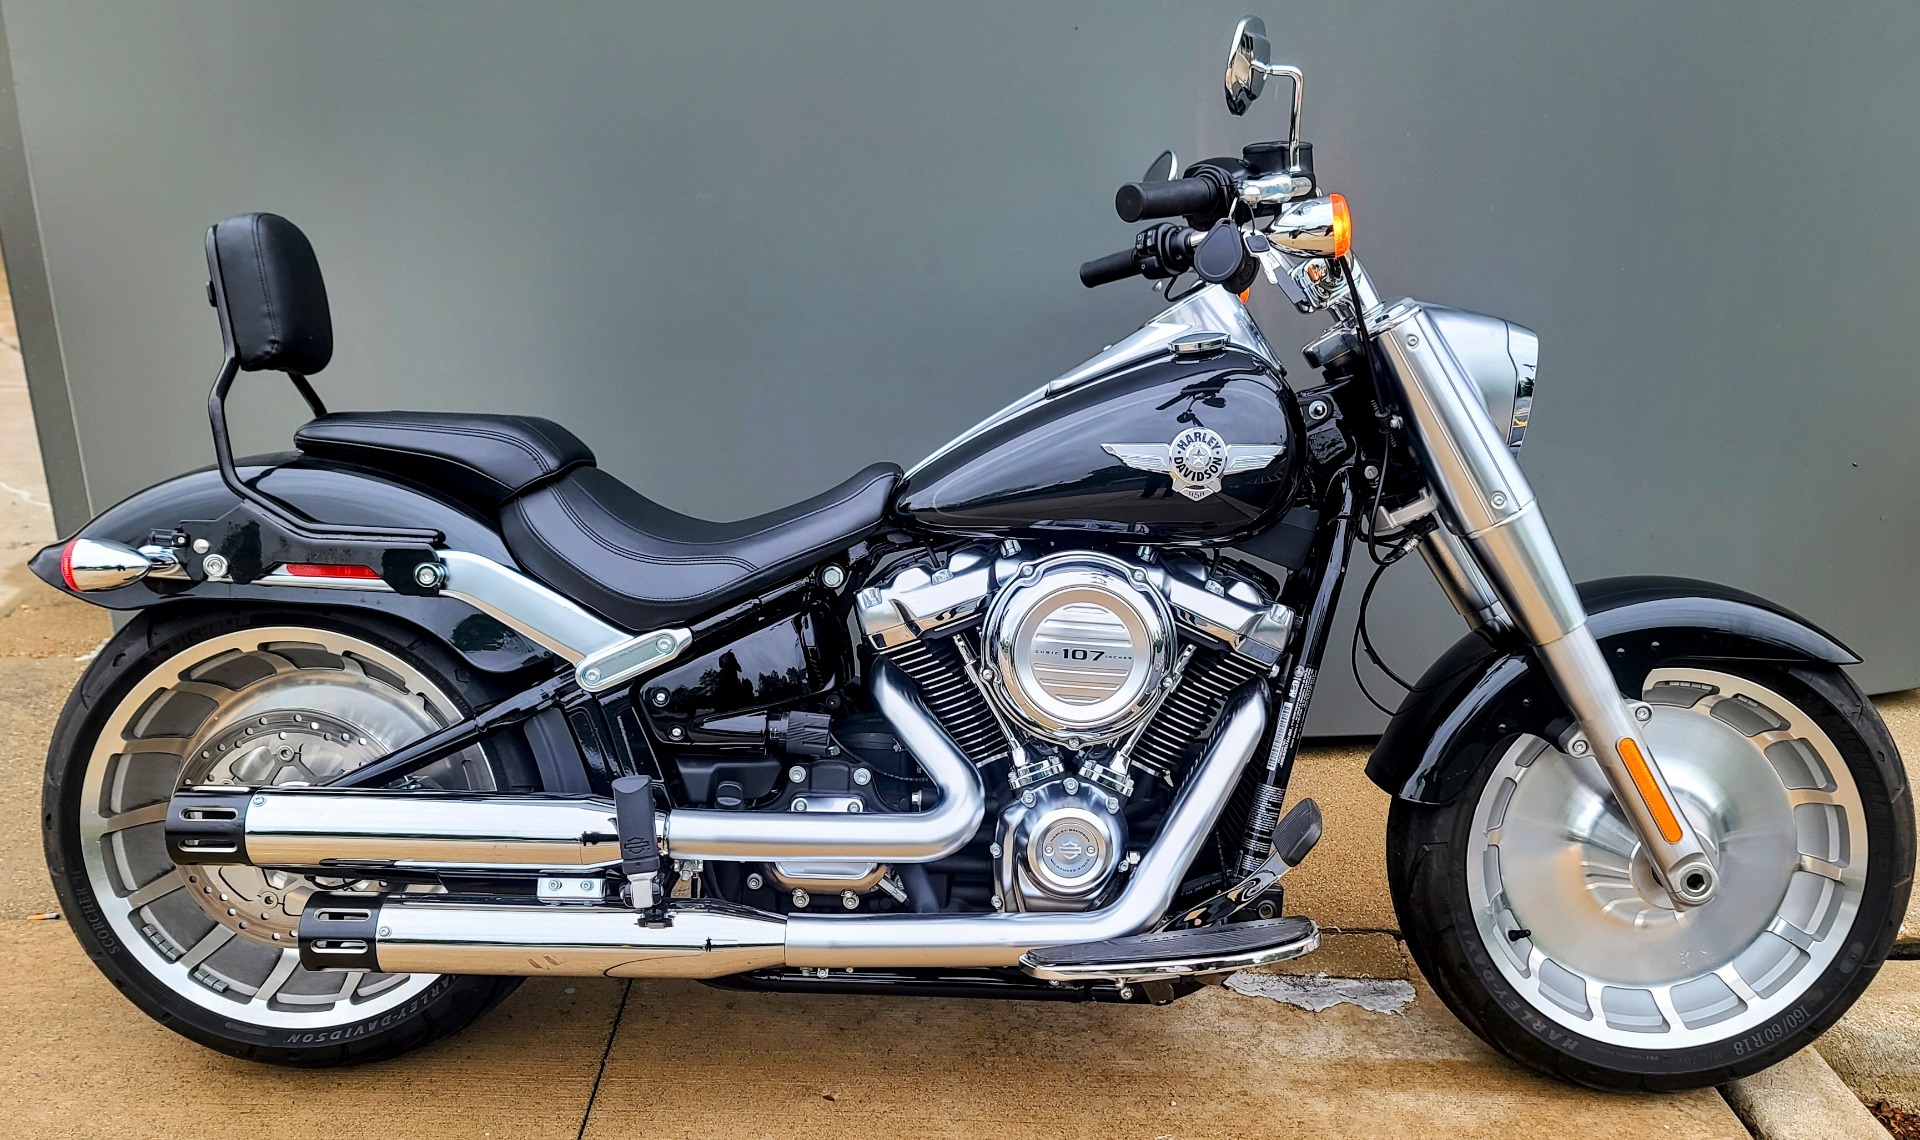 Used 2018 Harley Davidson Fat Boy 107 Black Tempest Price Specs Motorcycles In Lake Villa Il Har078928